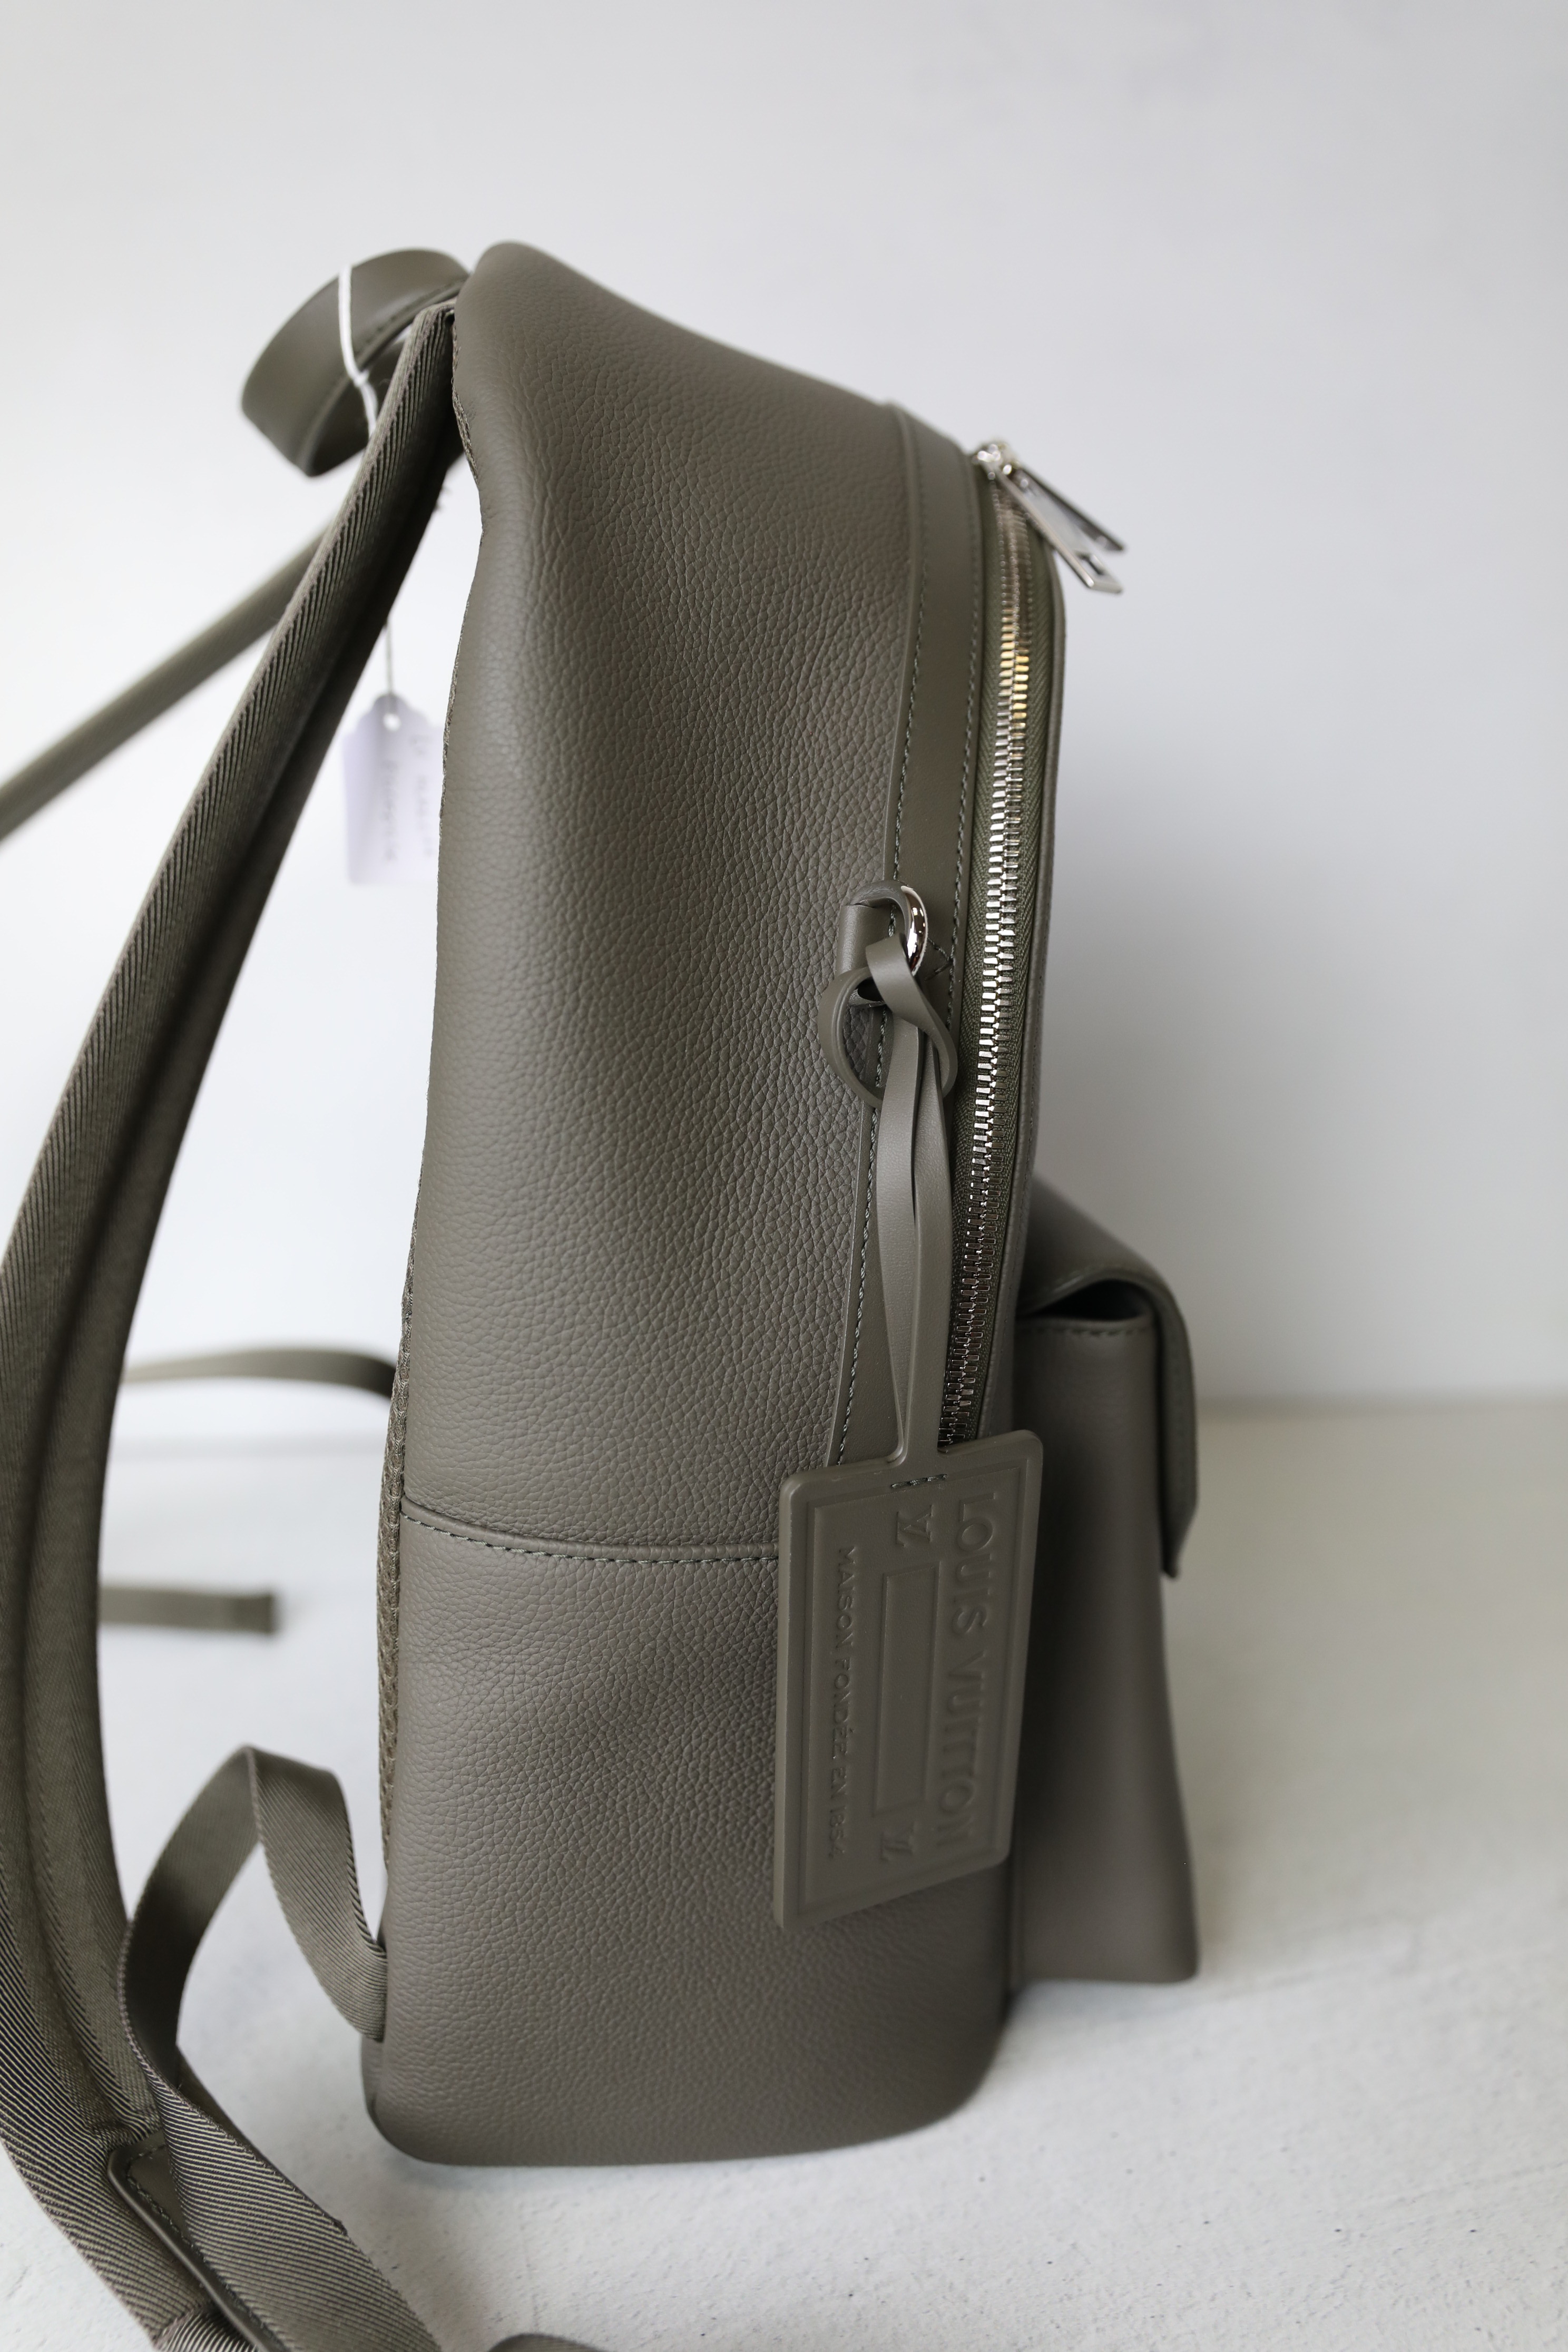 2014 Louis Vuitton Speedy 30 with dust bag lock & keys - $799  www.SHOPDUCKPIN.com #towson #timonium #huntvalley #rolandpark #baltimore…